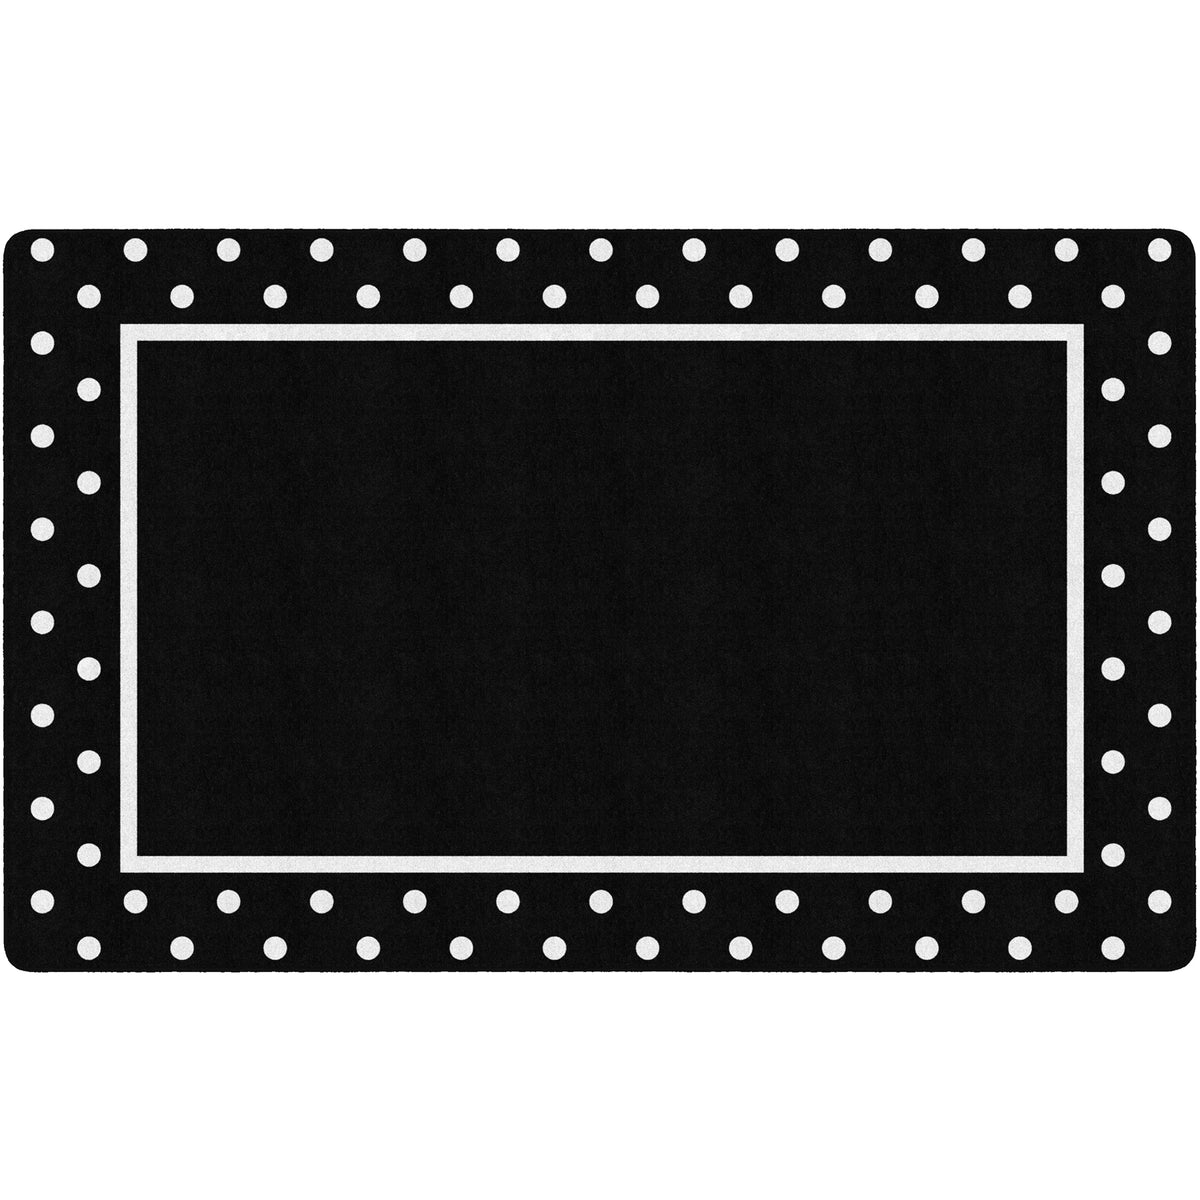  Bardic Polka Dot Half Round Door Mat, White Black Dot